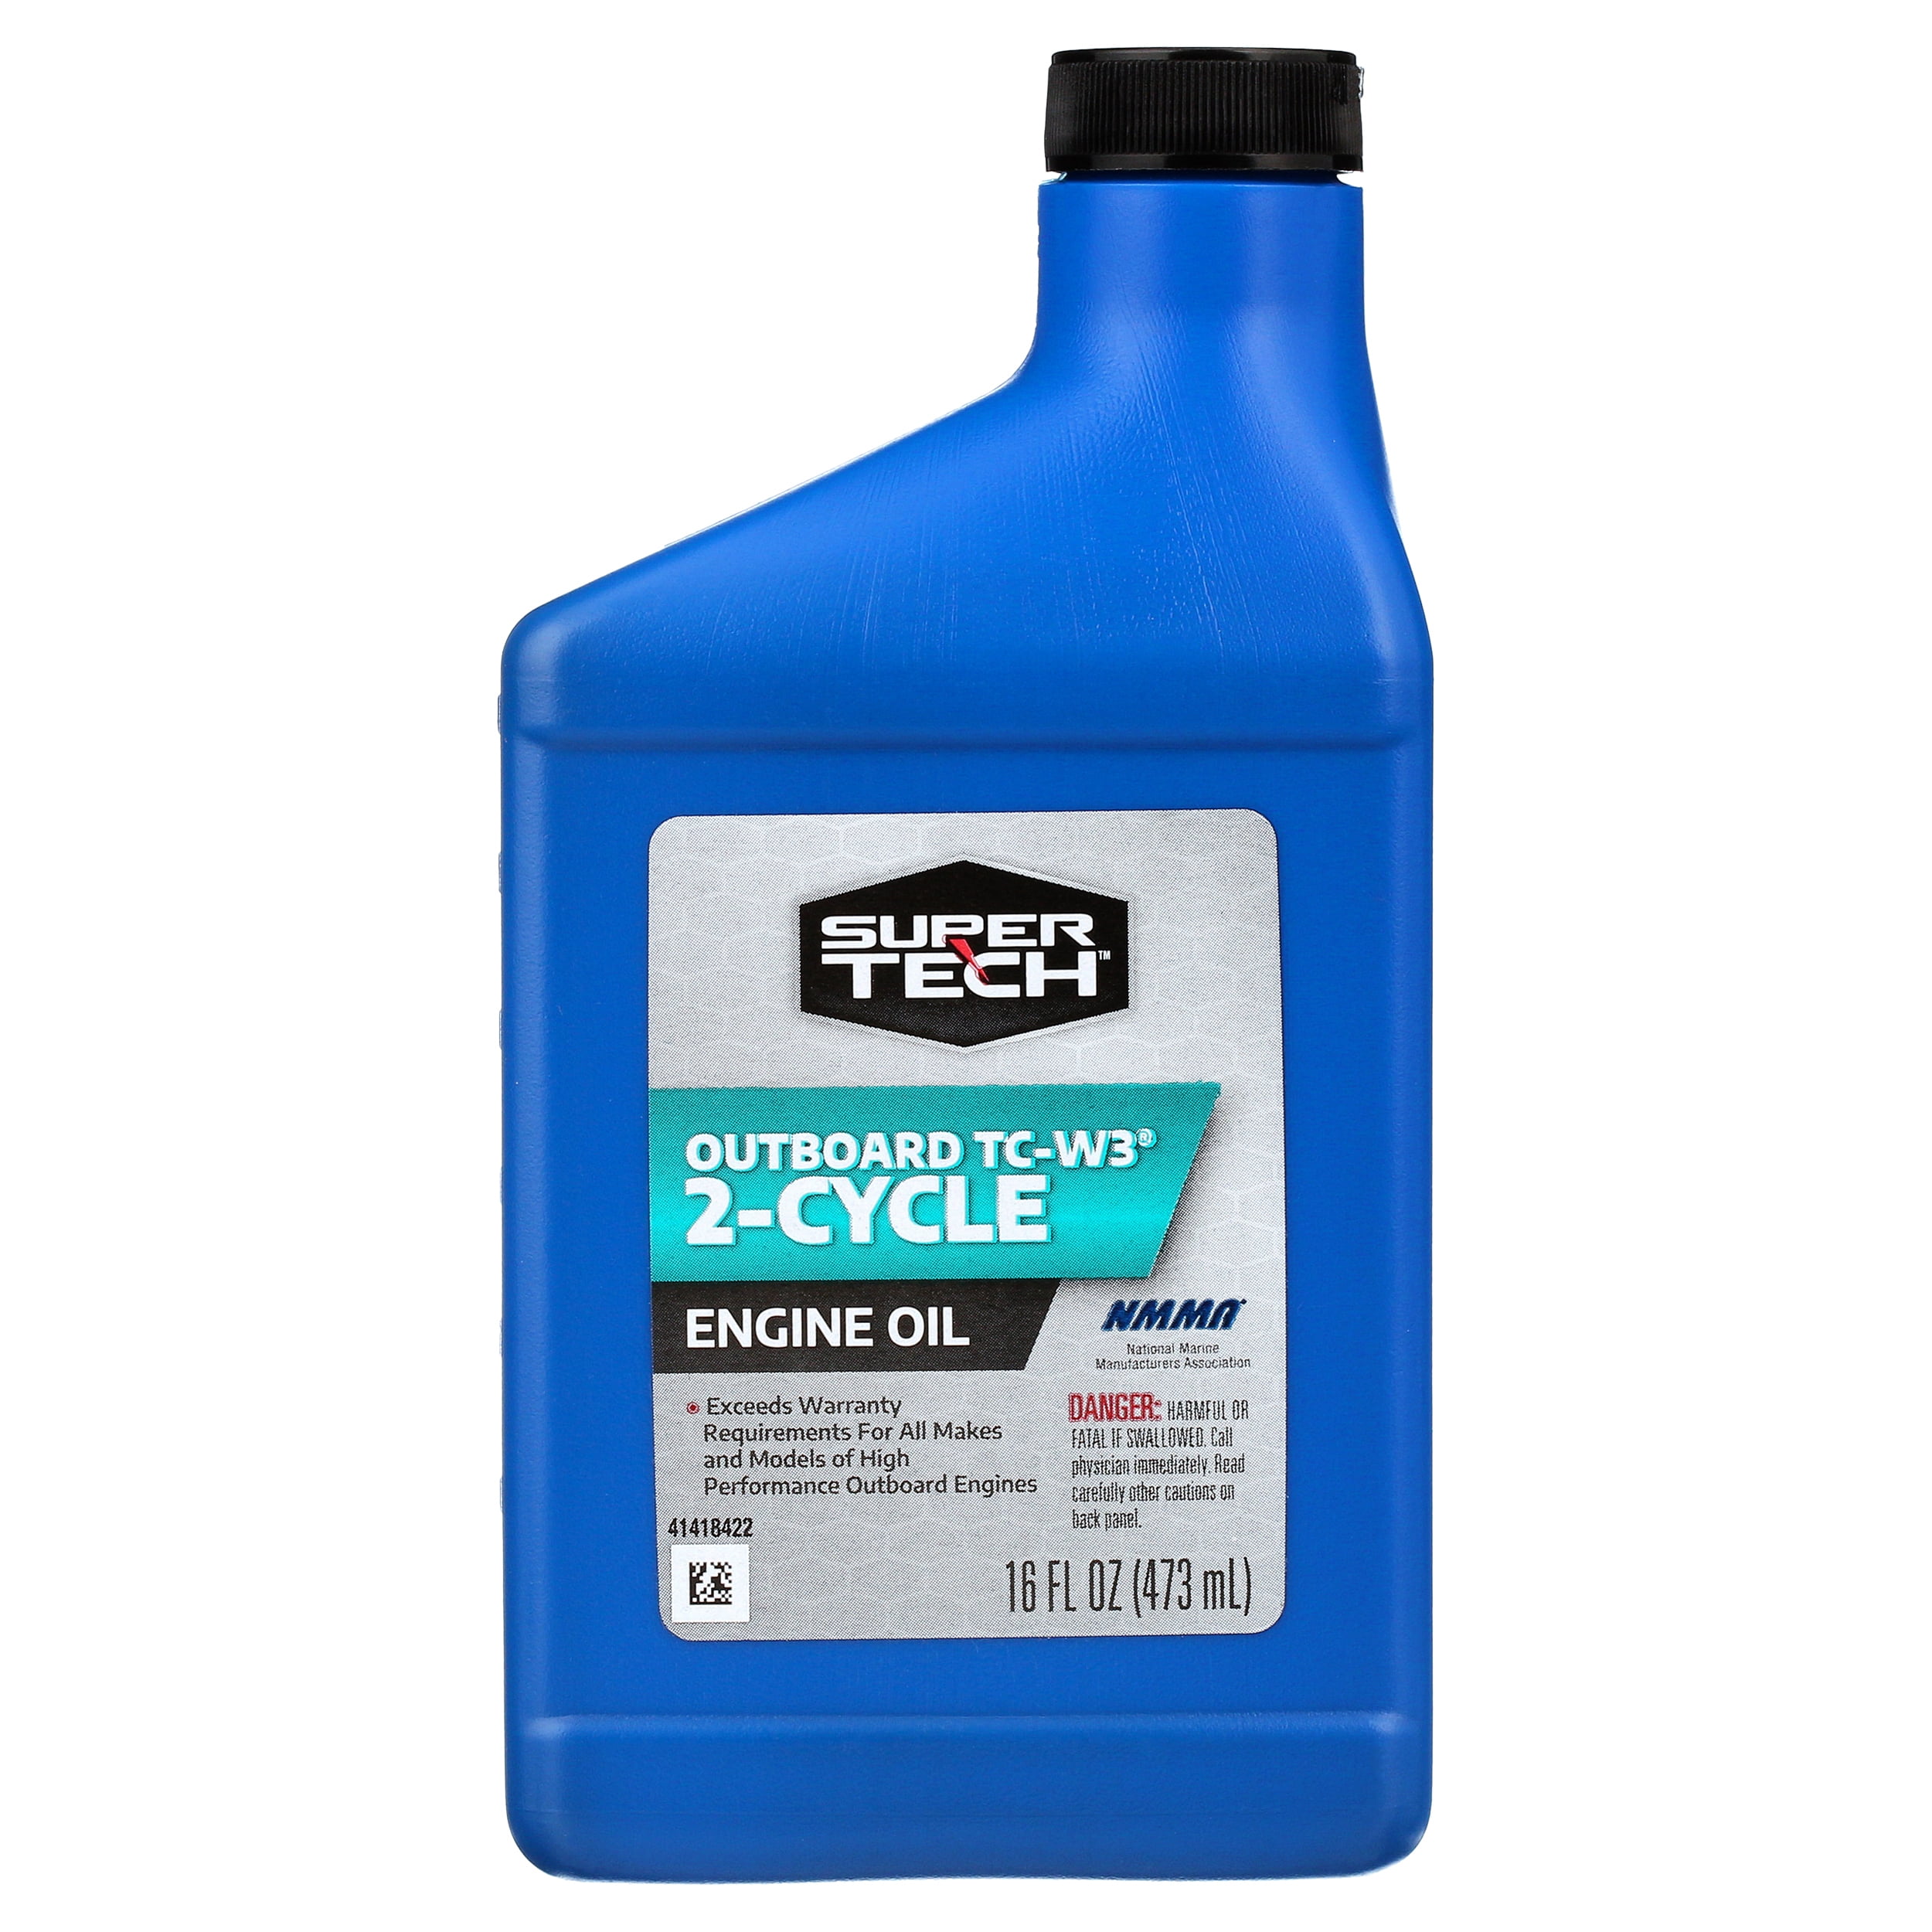 Super Tech TC-W3 Outboard 2 Cycle Engine Oil, 16 oz bottle